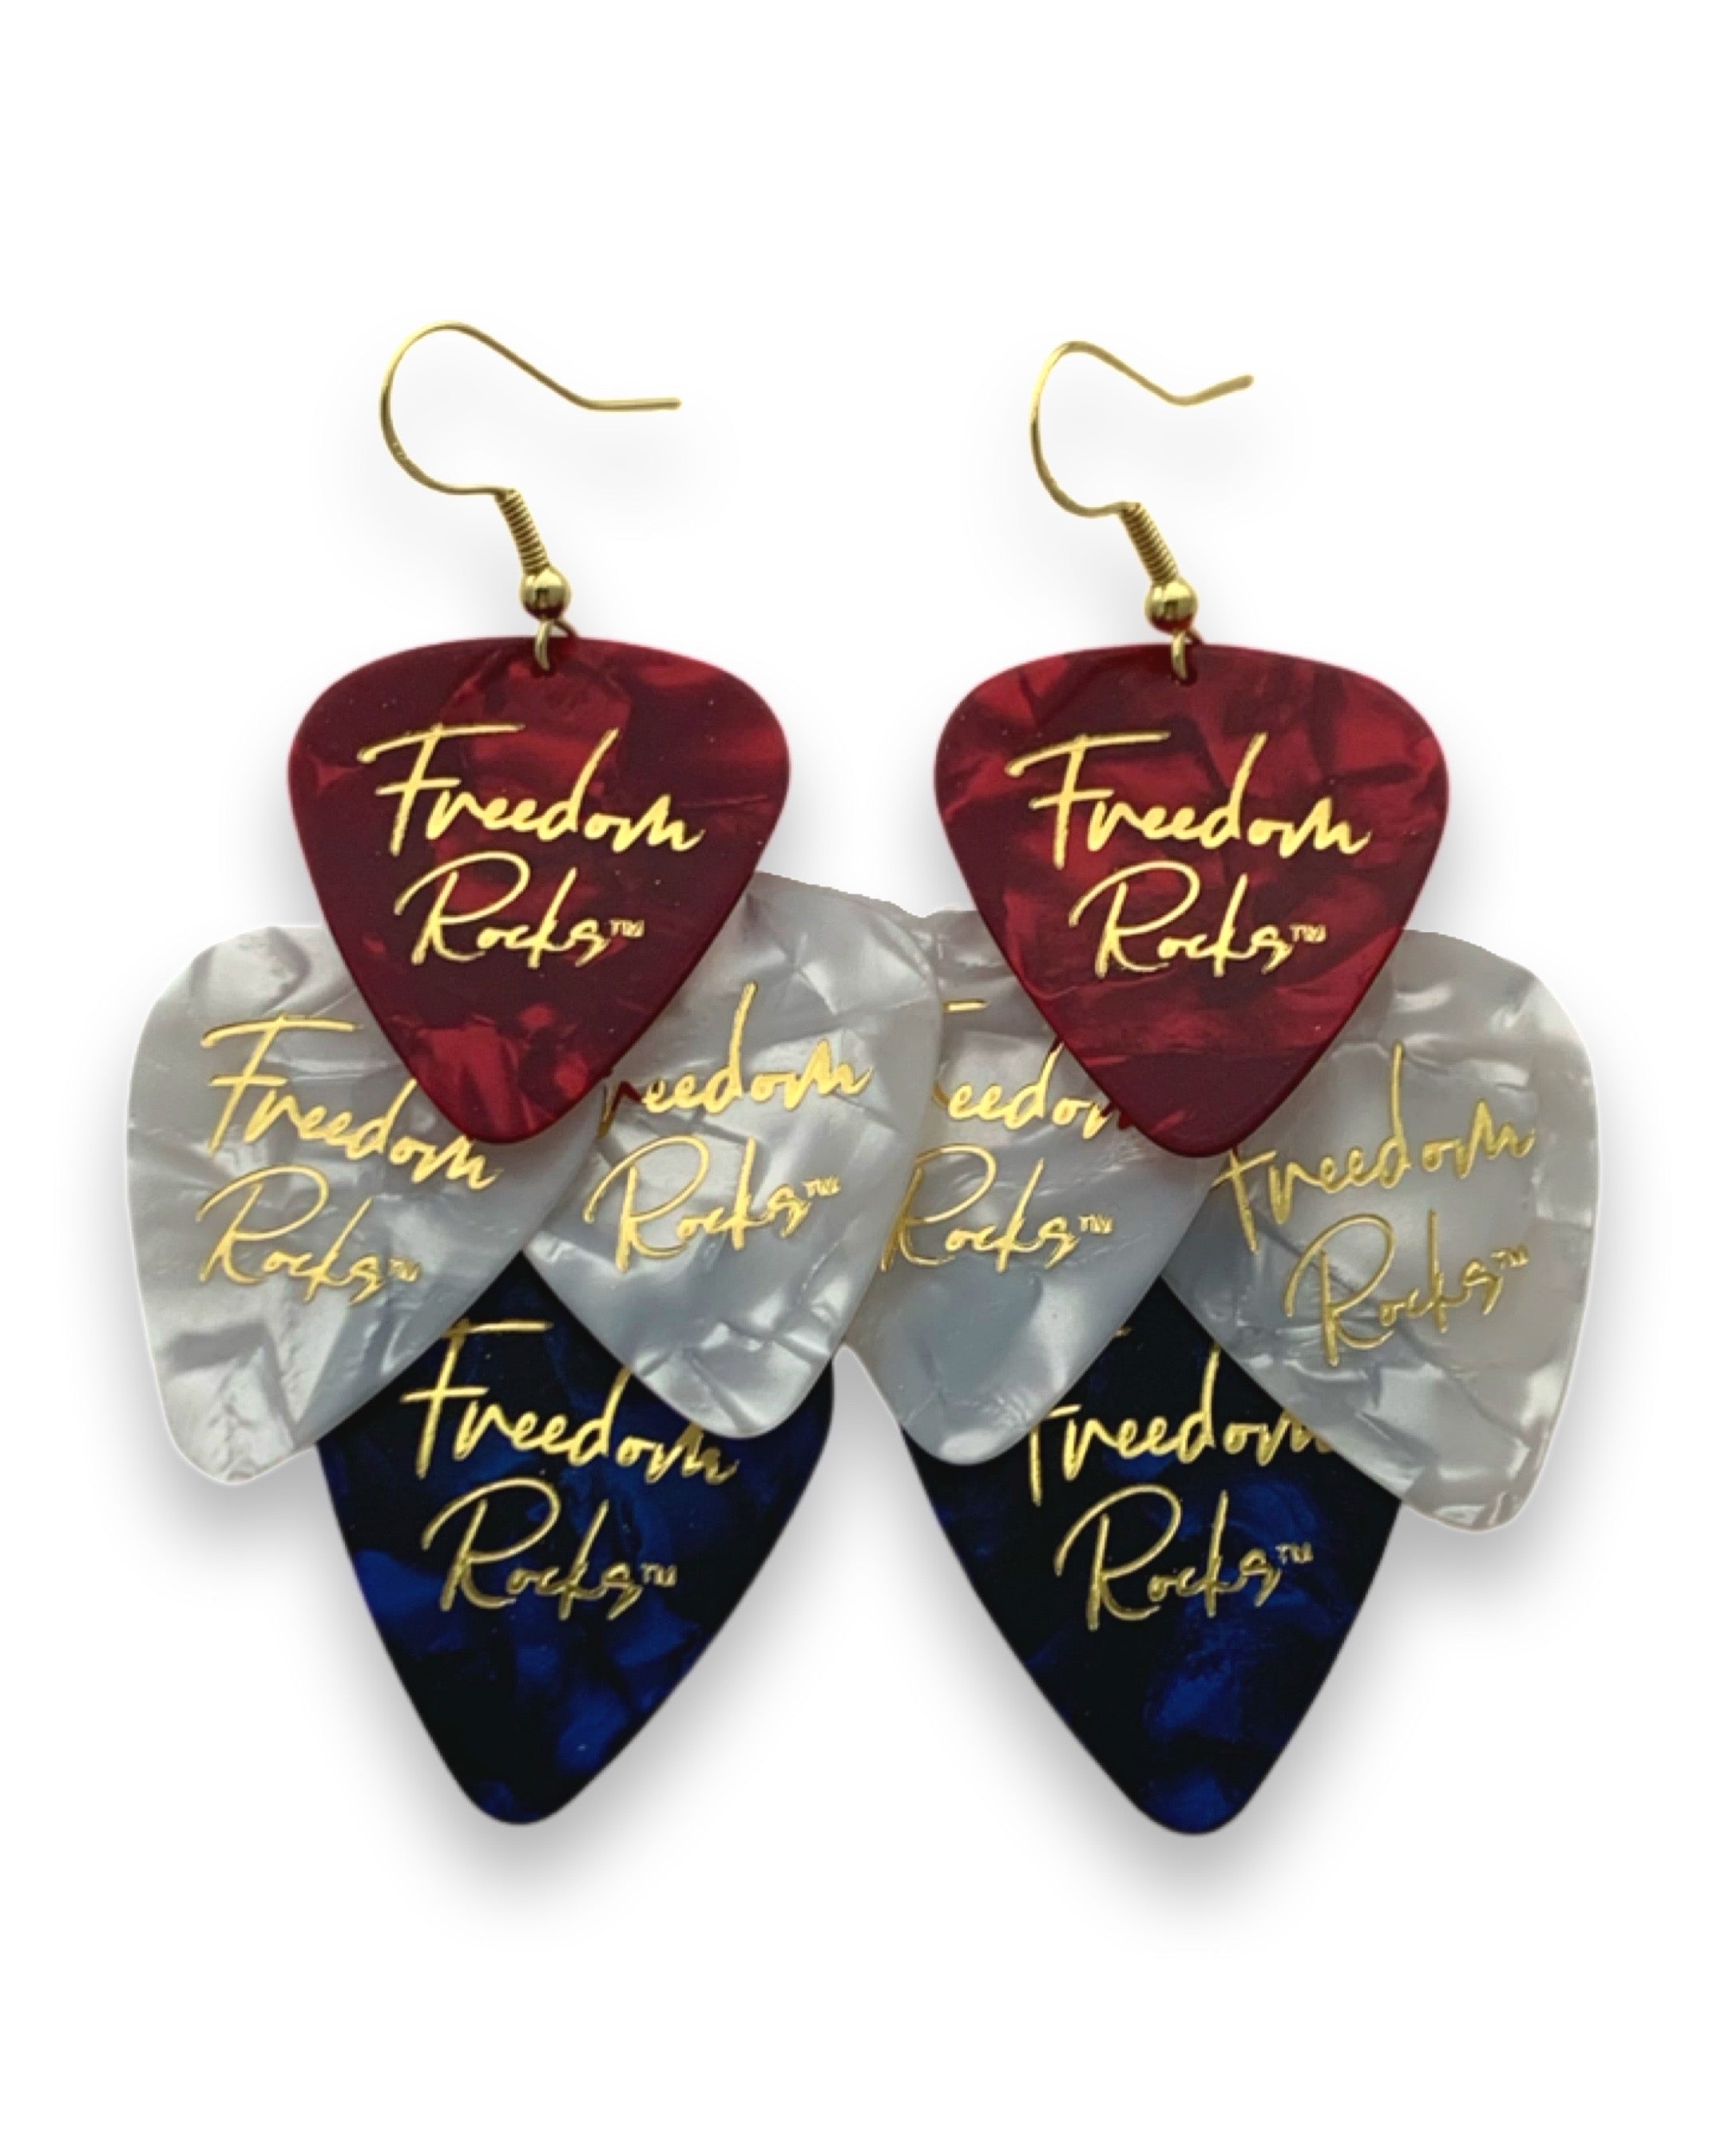 Freedom Rocks Red, White, Blue Minor Guitar Pick Earrings